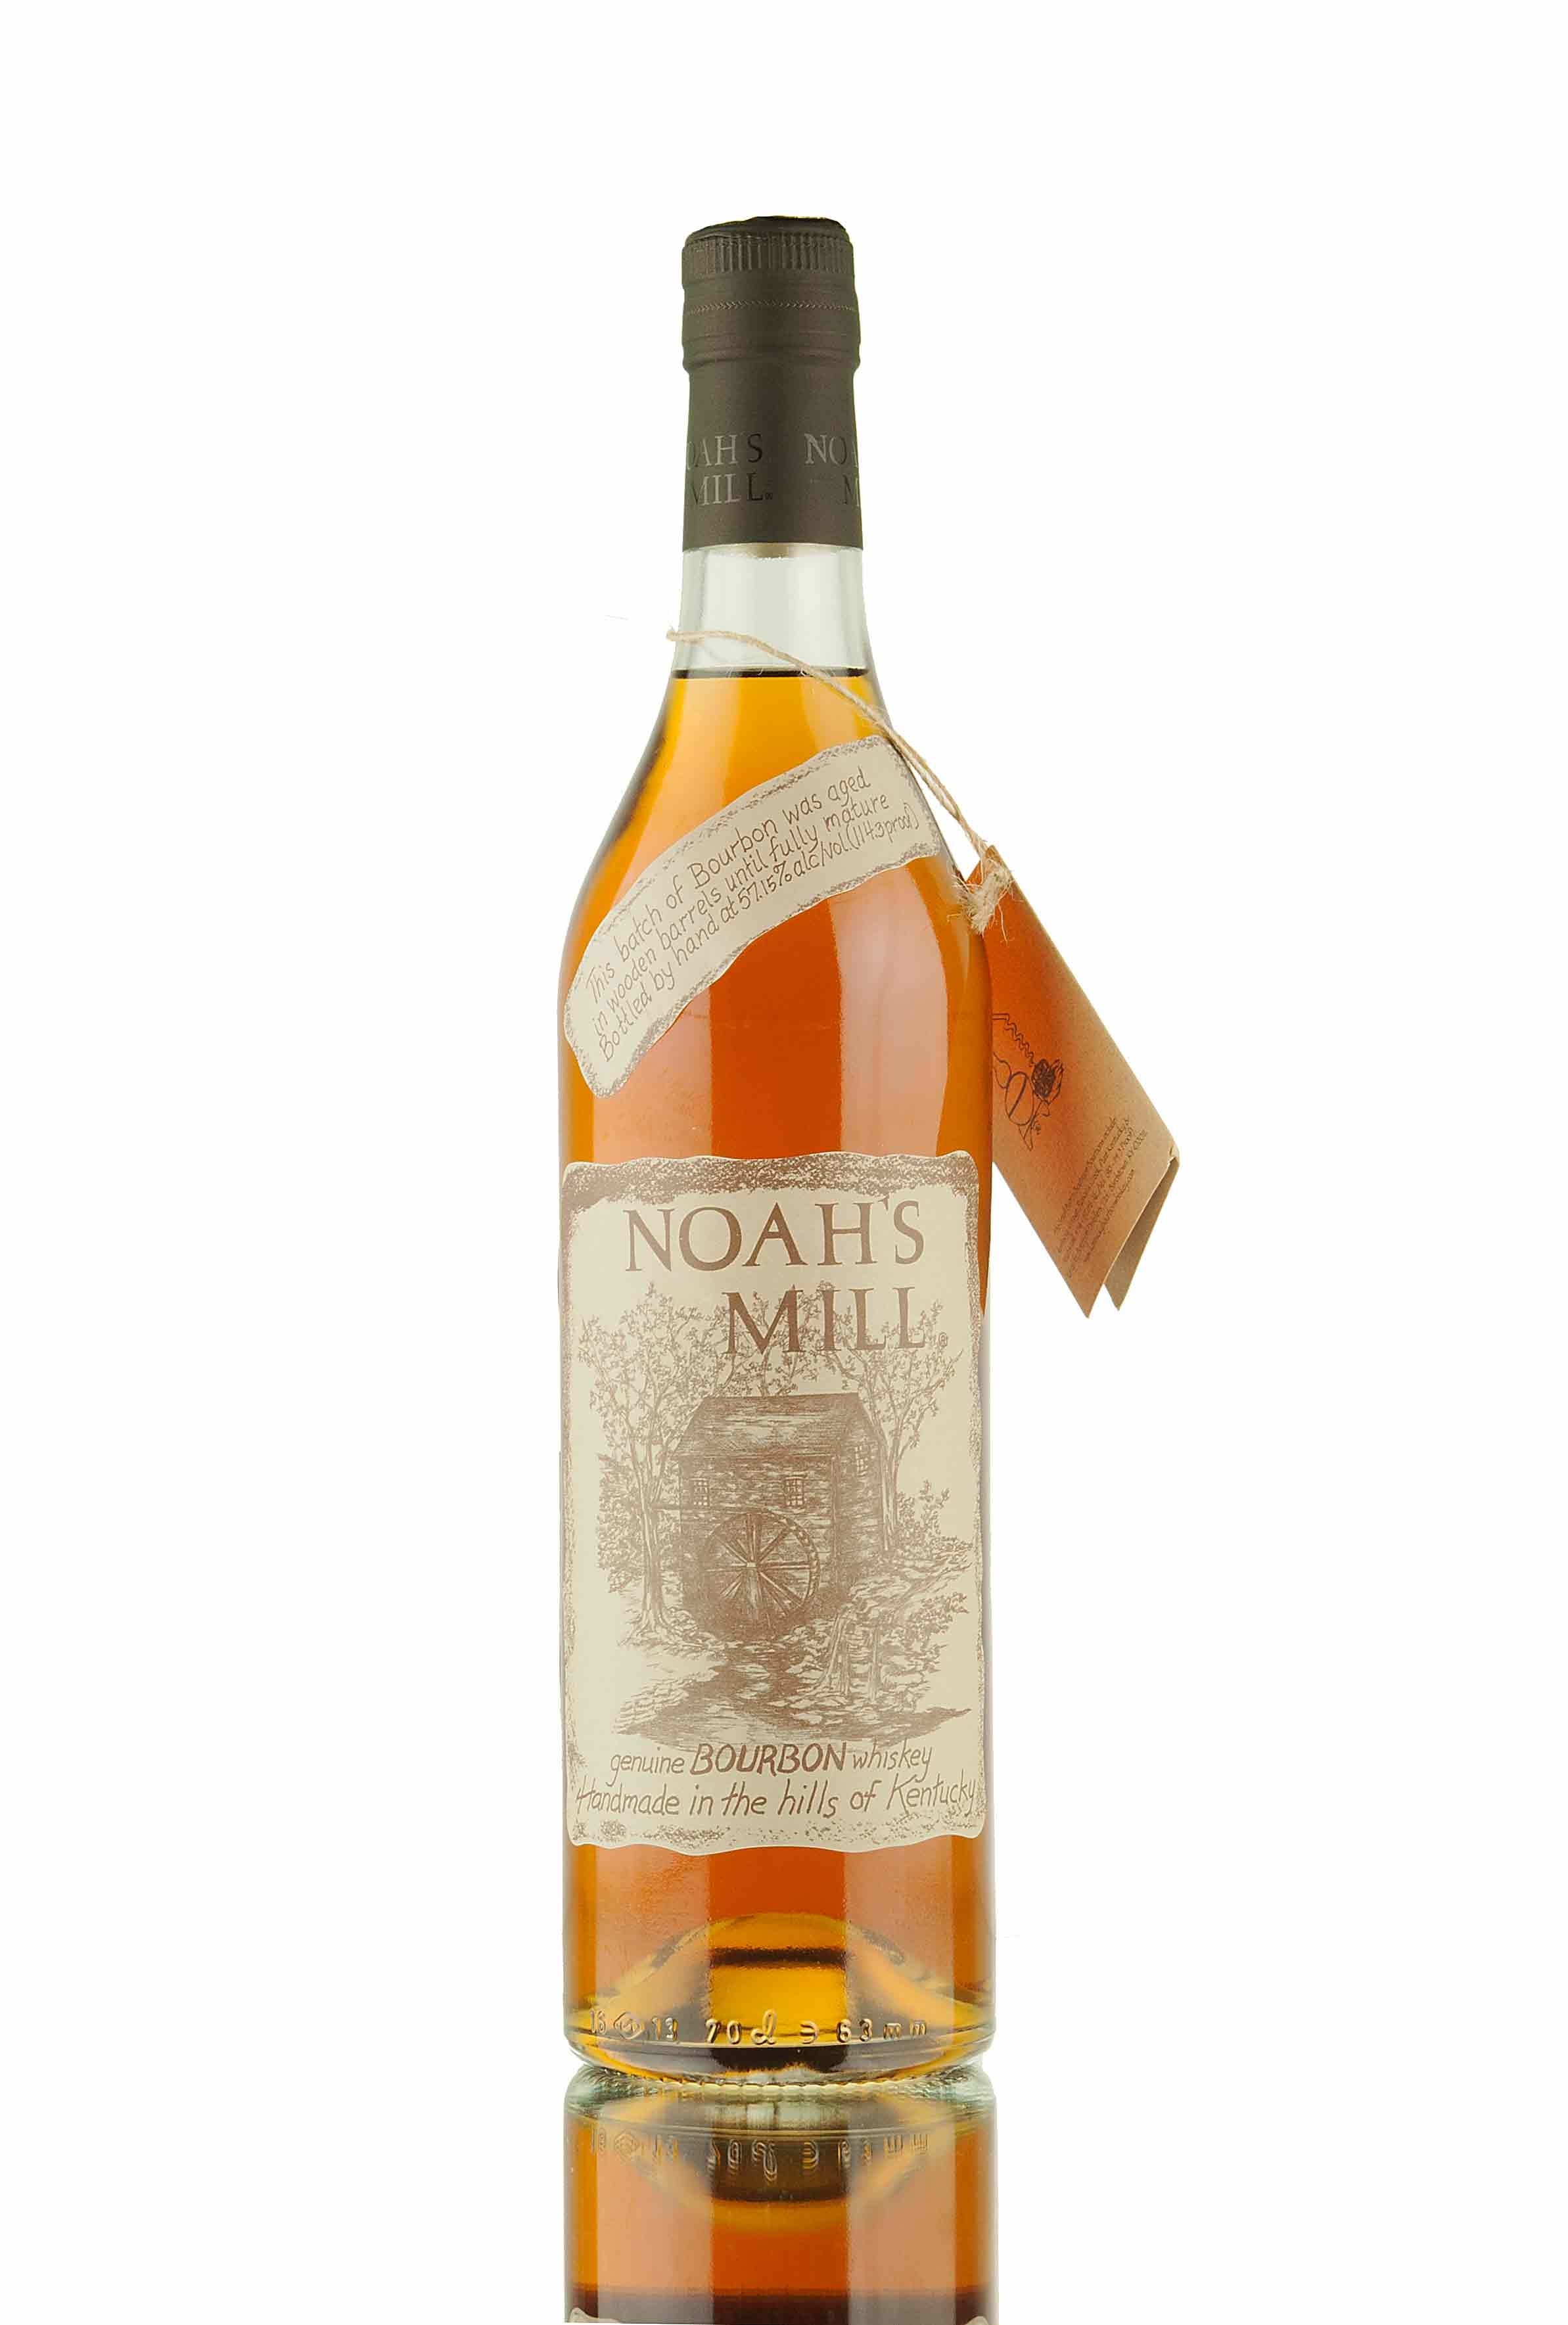 Noah's Mill Kentucky Bourbon Whiskey